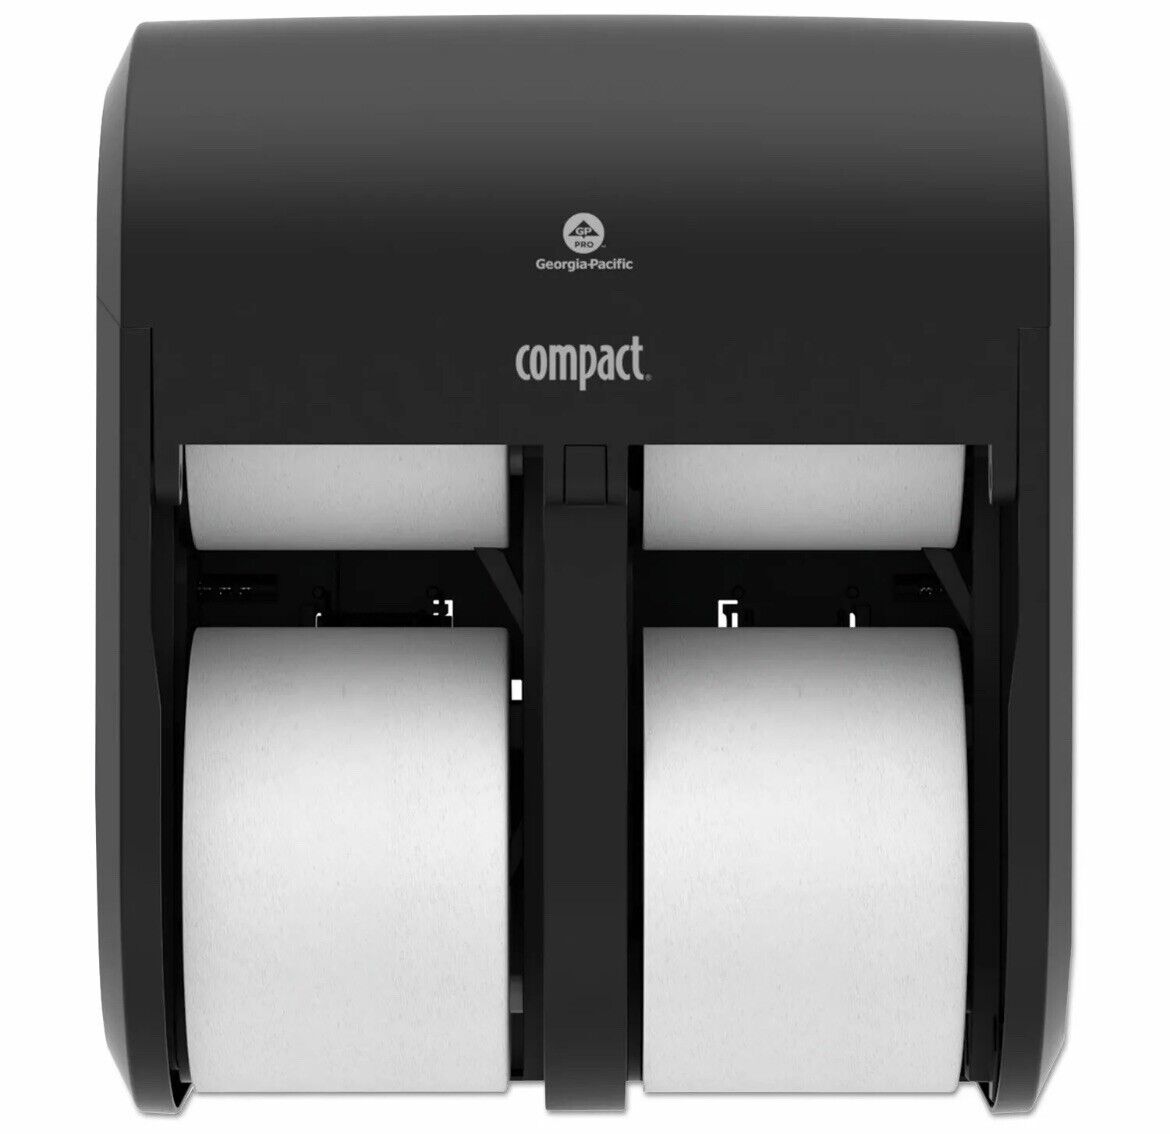 Compact, GPC56744A, 4-Roll Quad Coreless High-Capacity Toilet Paper Dispenser...